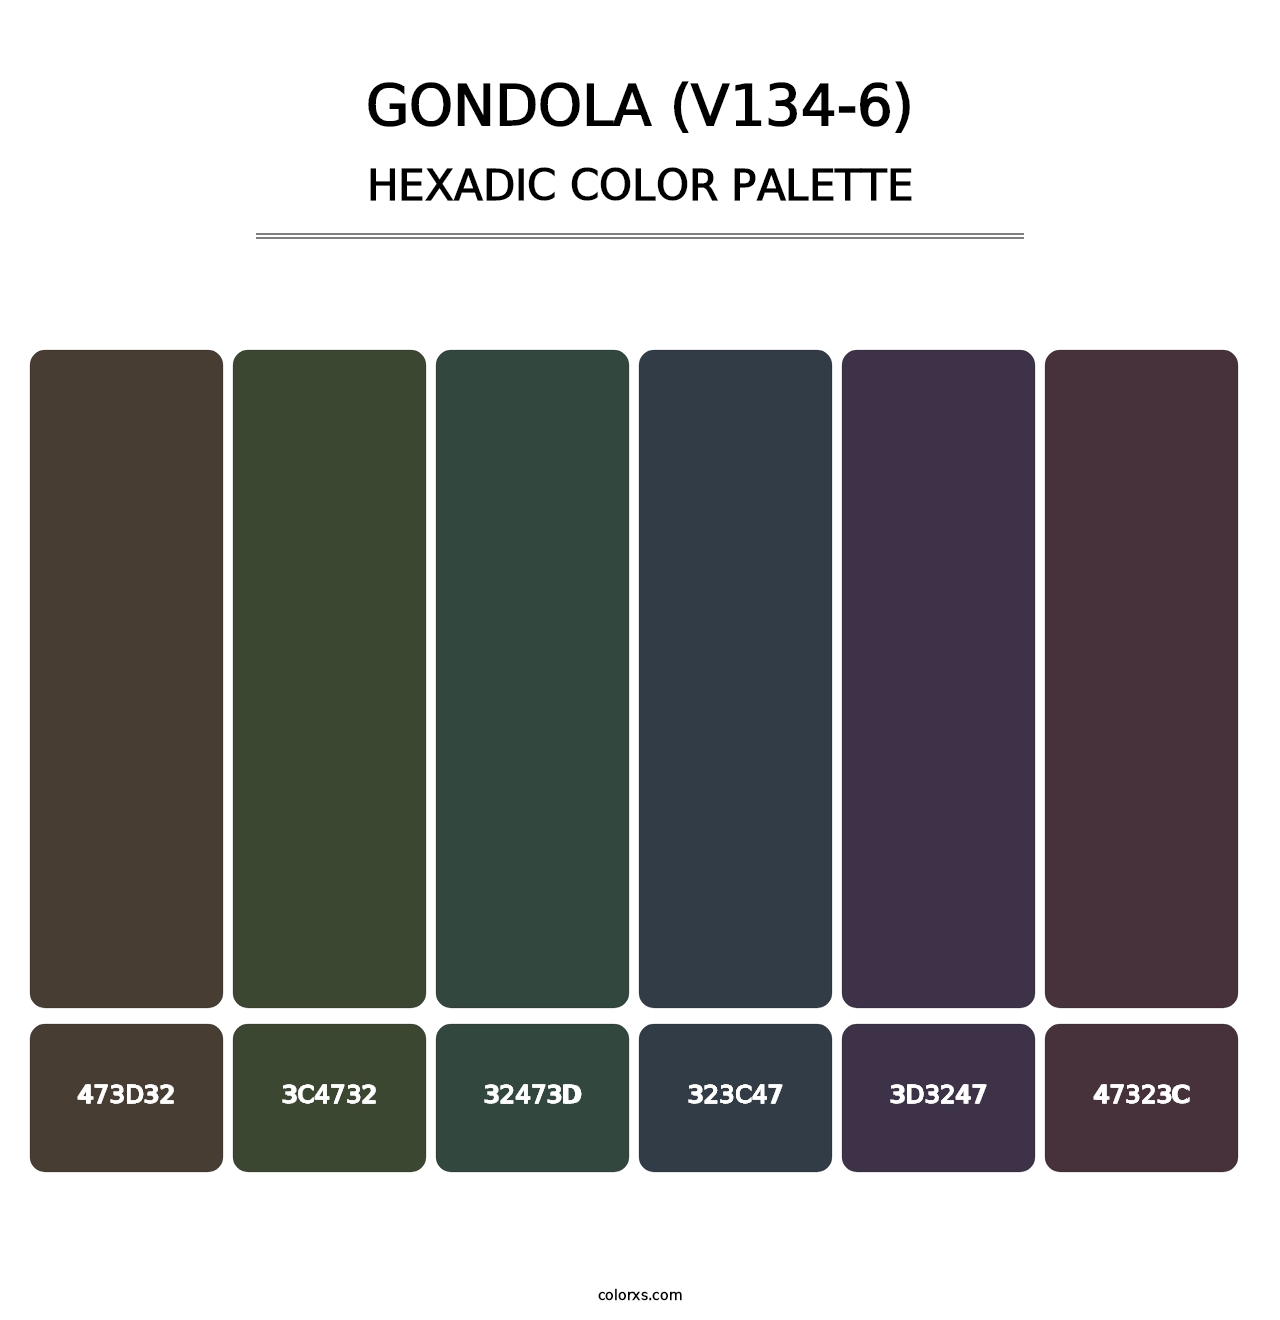 Gondola (V134-6) - Hexadic Color Palette